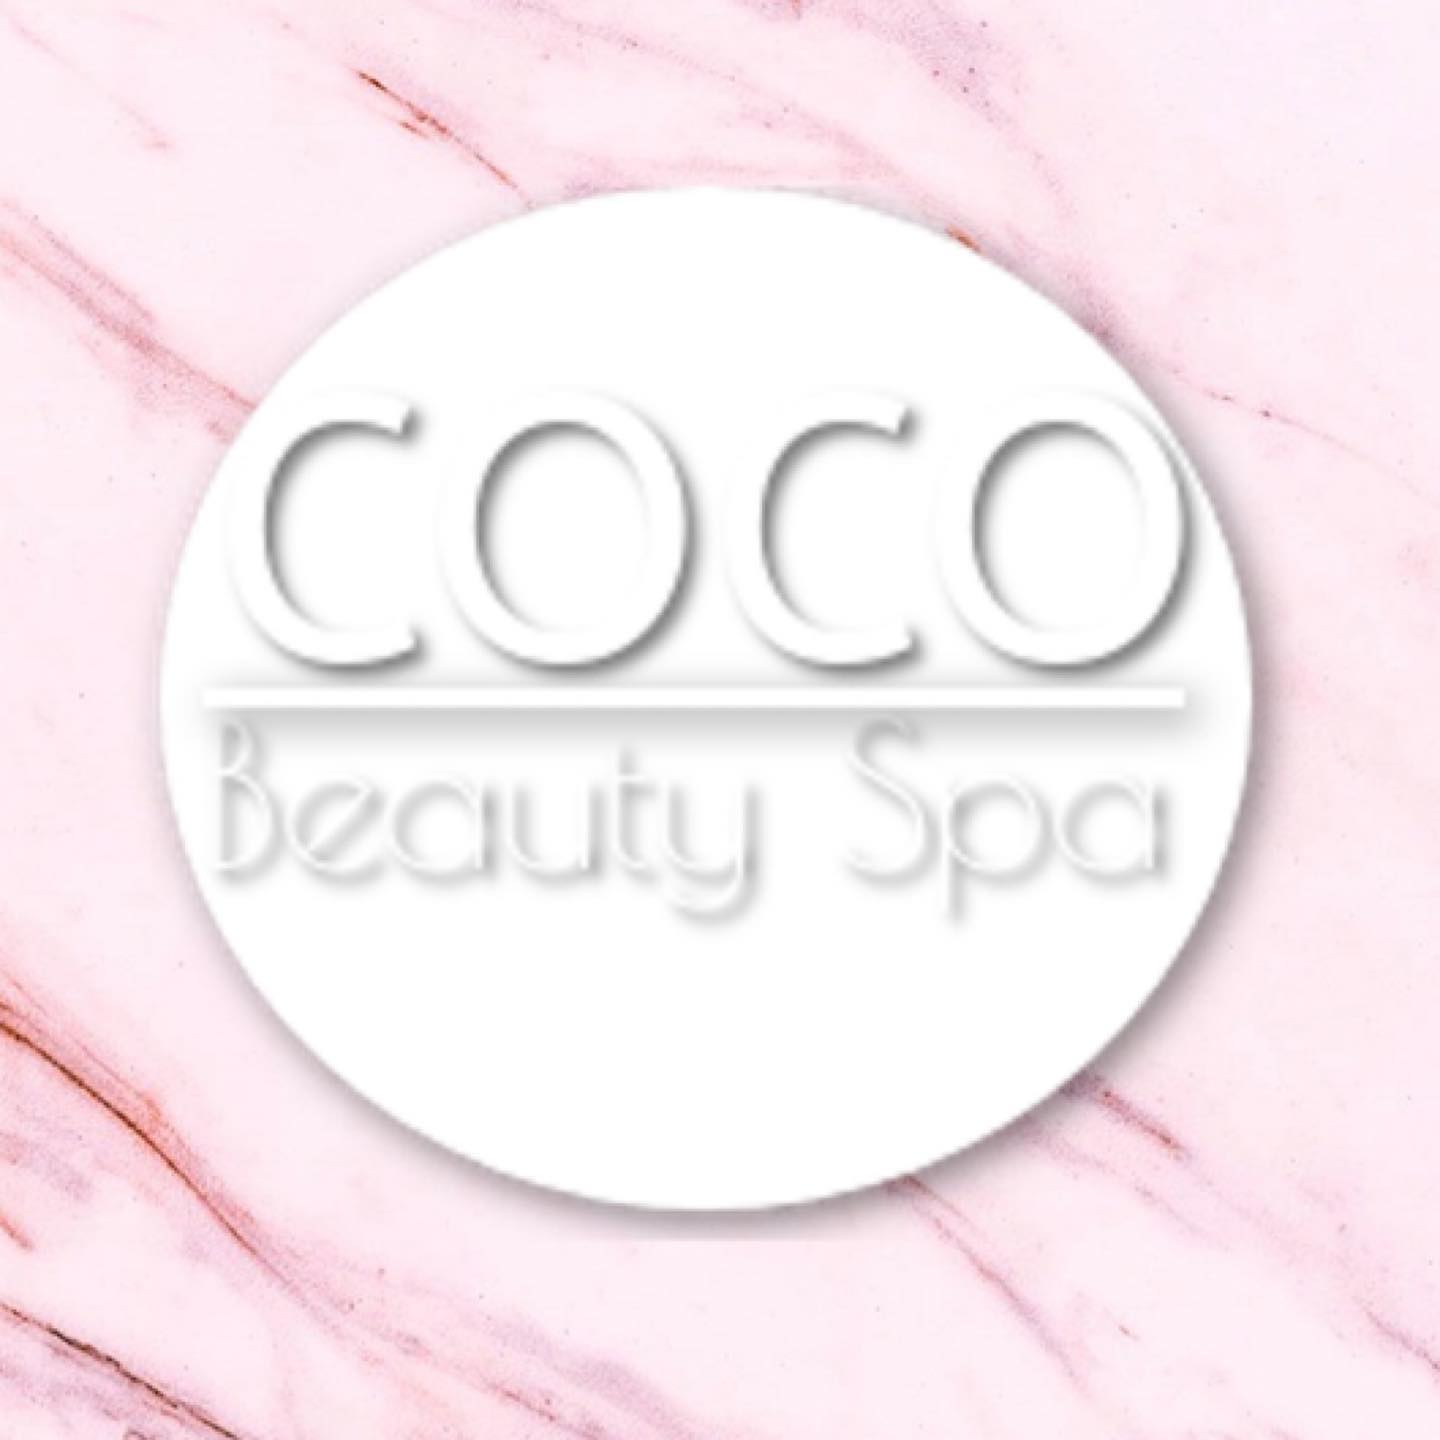 COCO Beauty Spa